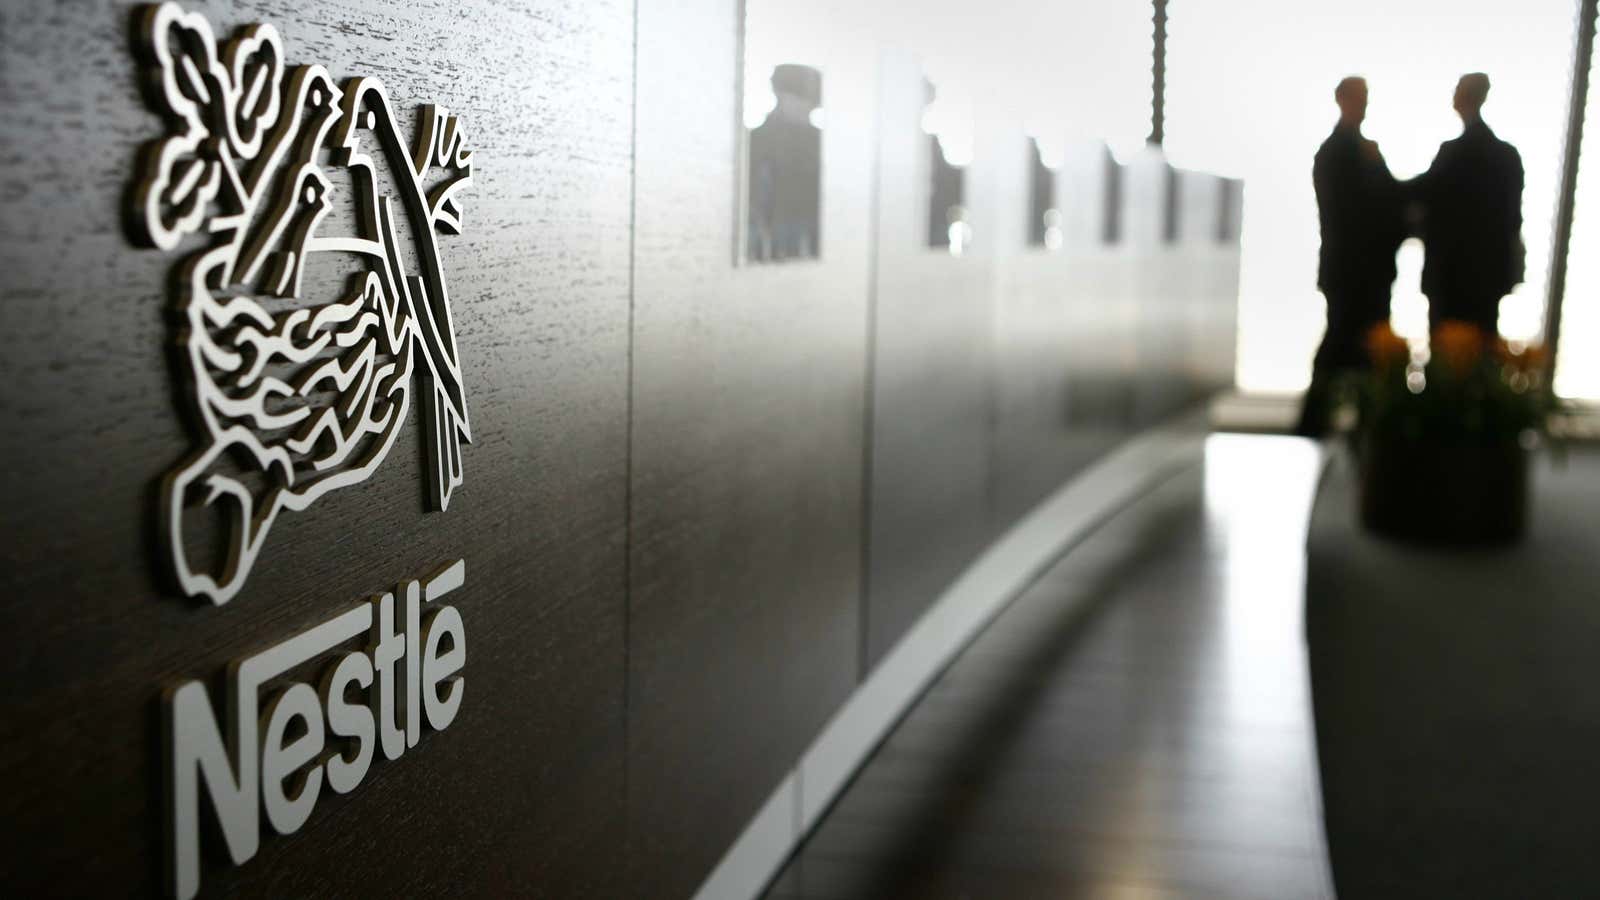 Nestlé has a vision for the next evolution of food.